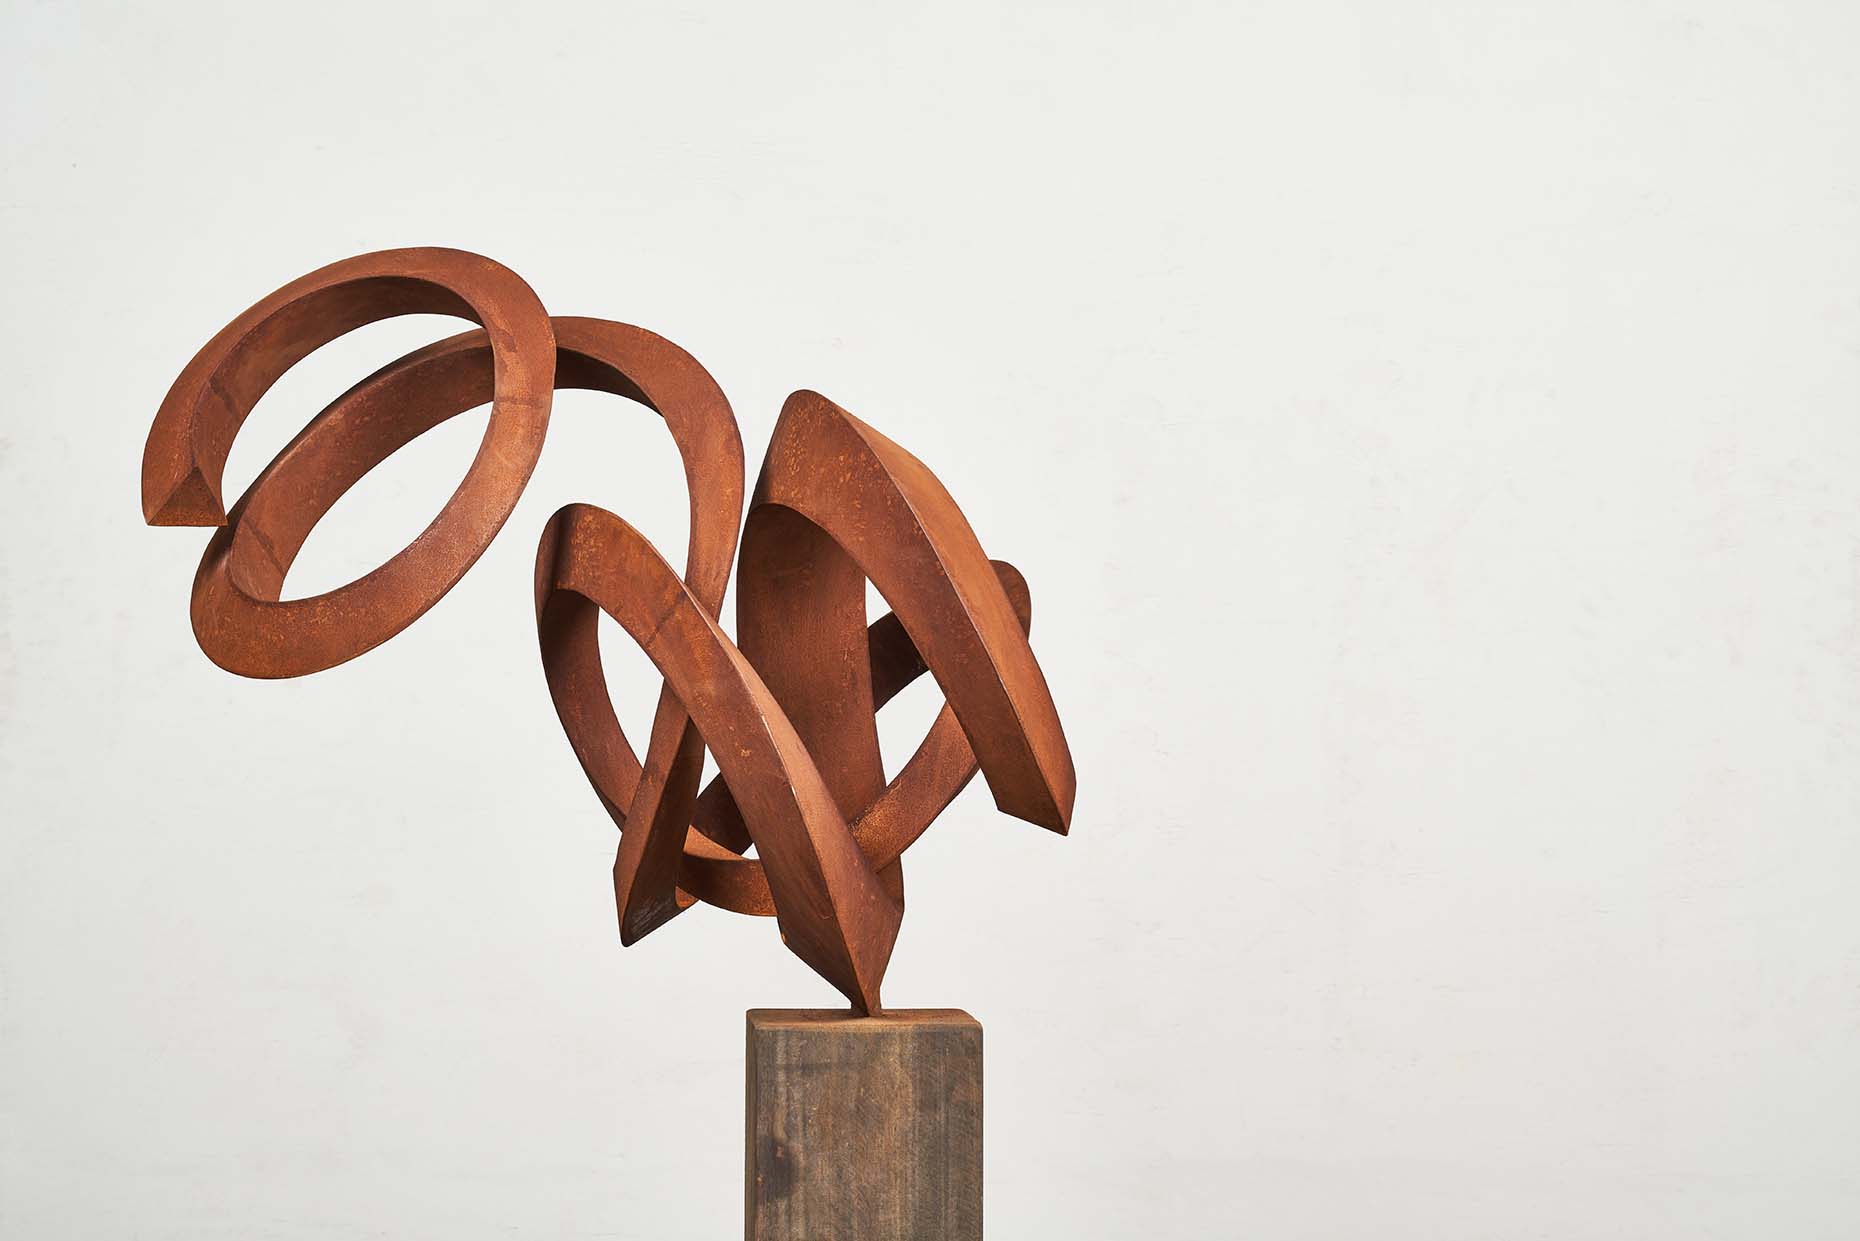 Pieter Obels sculptor | 2020 | 2